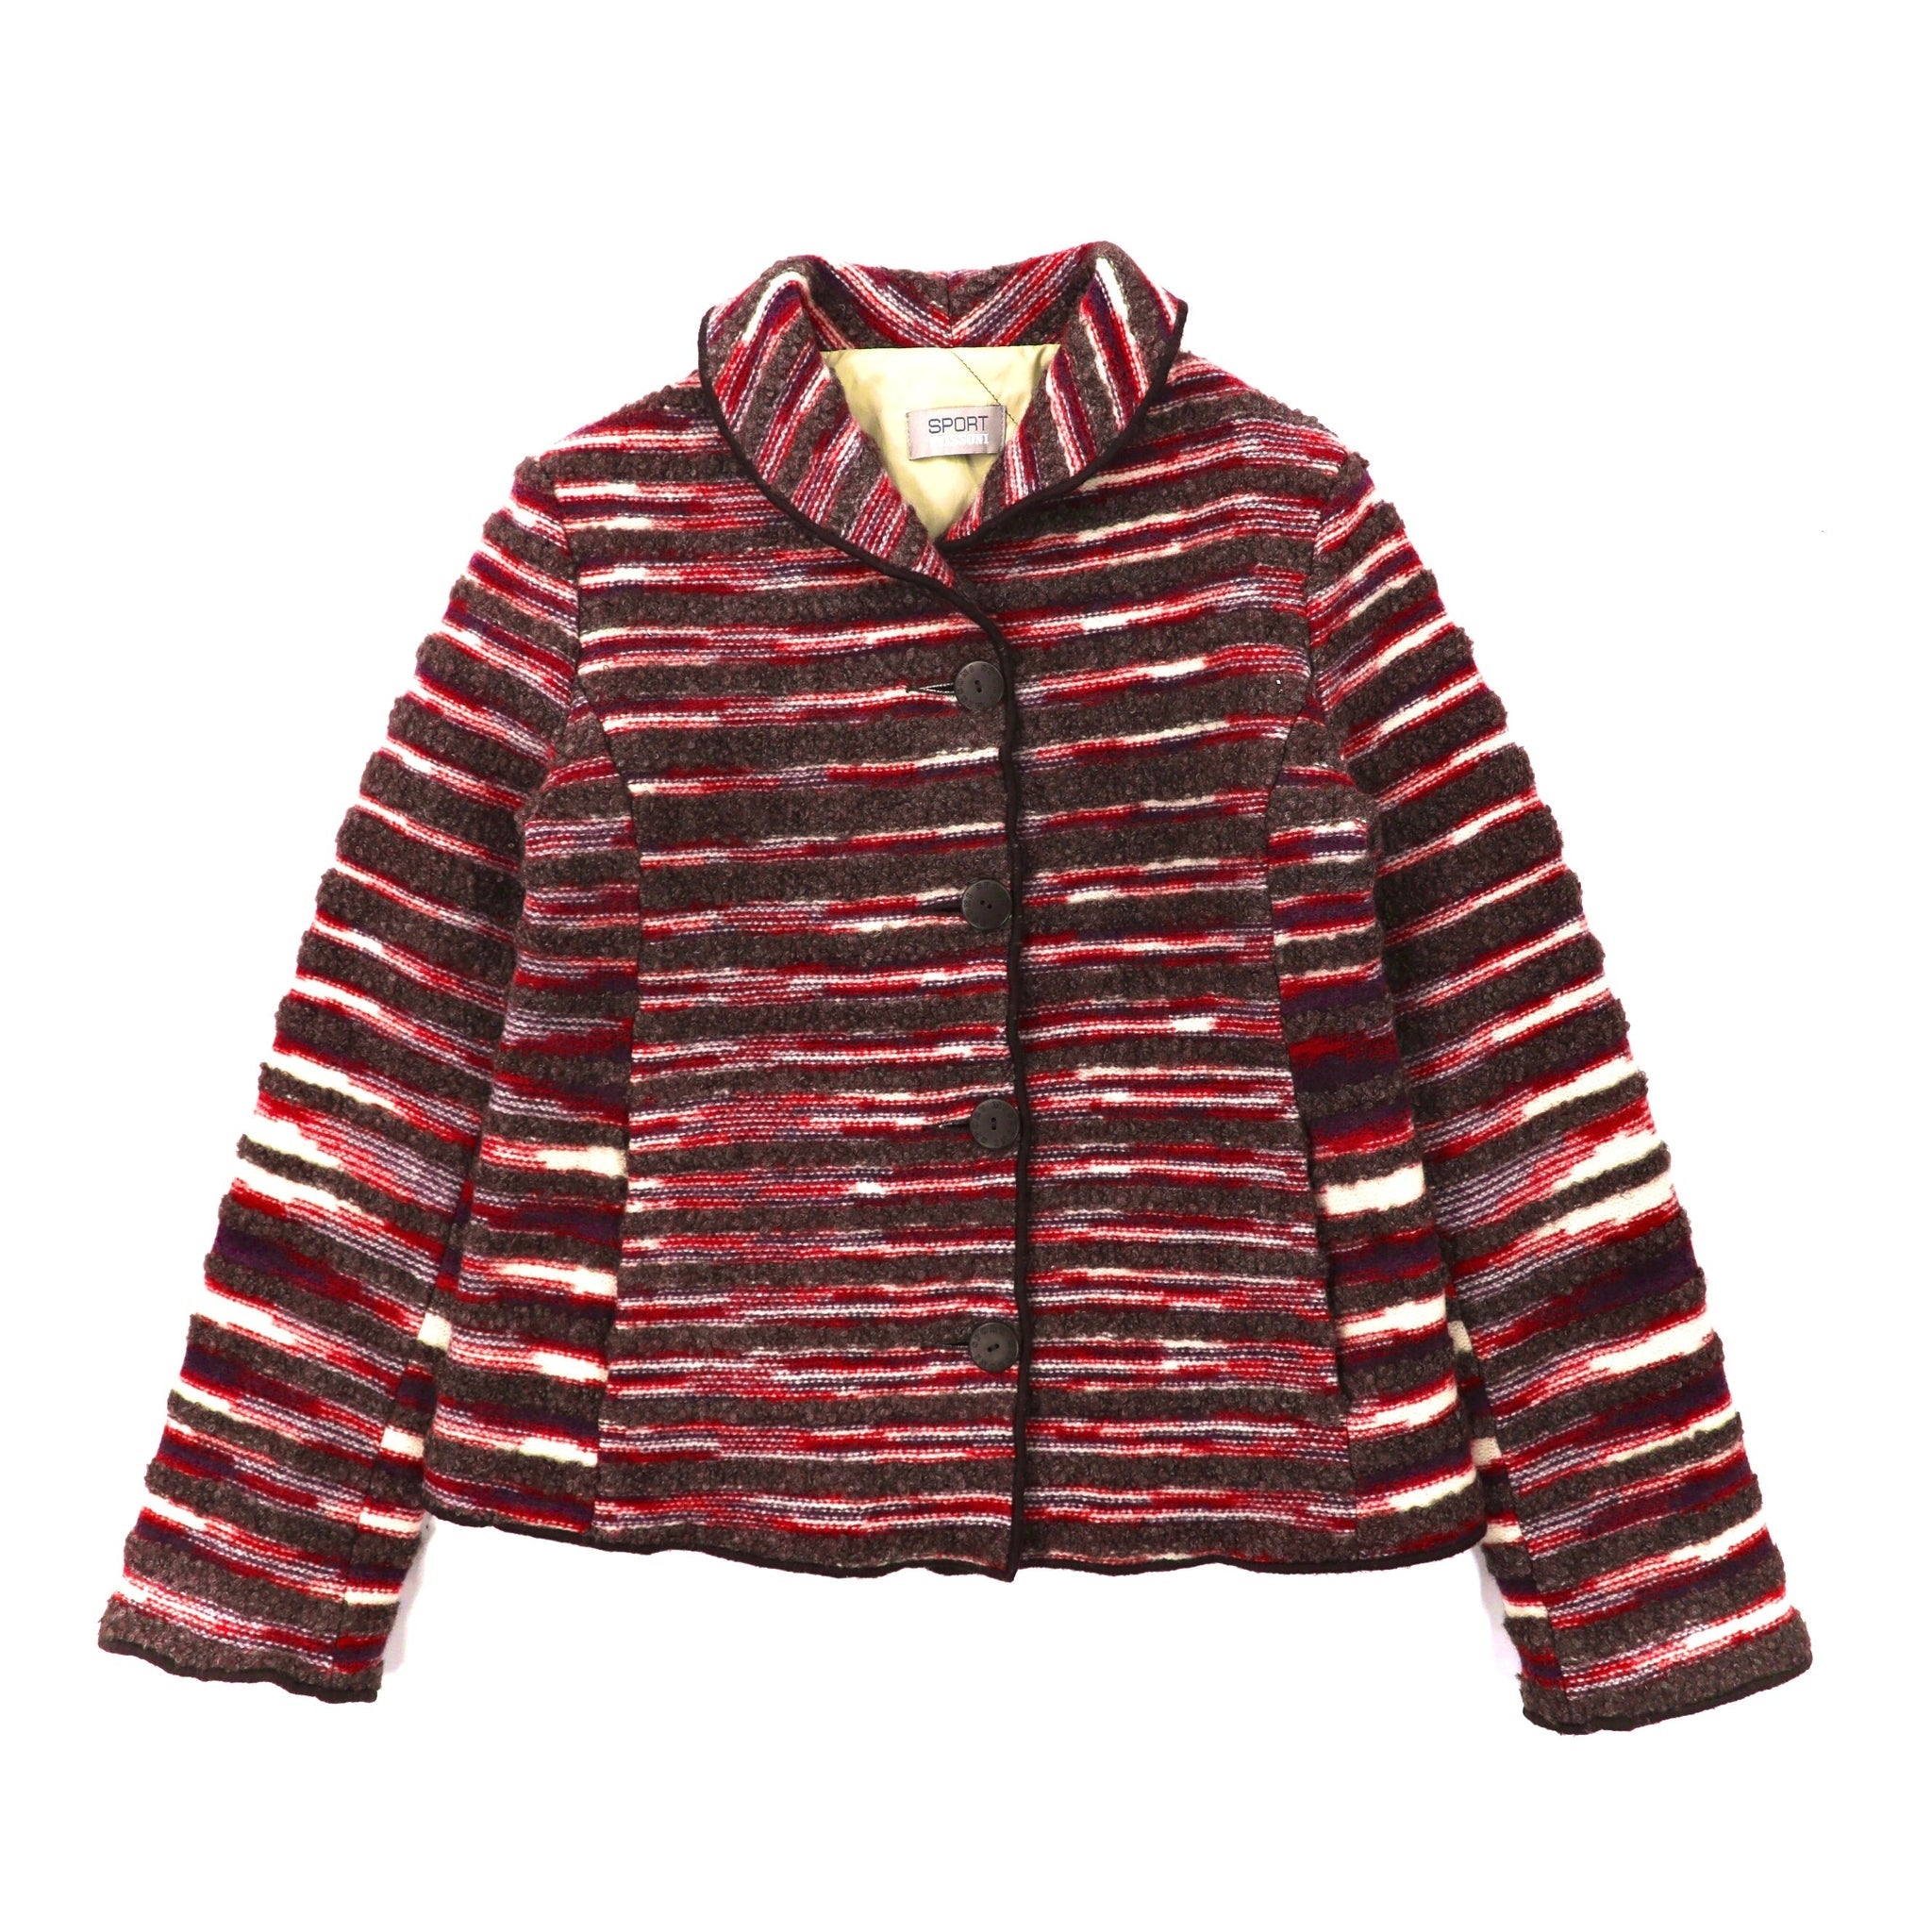 Missoni SPORT Mohair jacket 3D Knit Jacket 40 Brown Wool Italy 